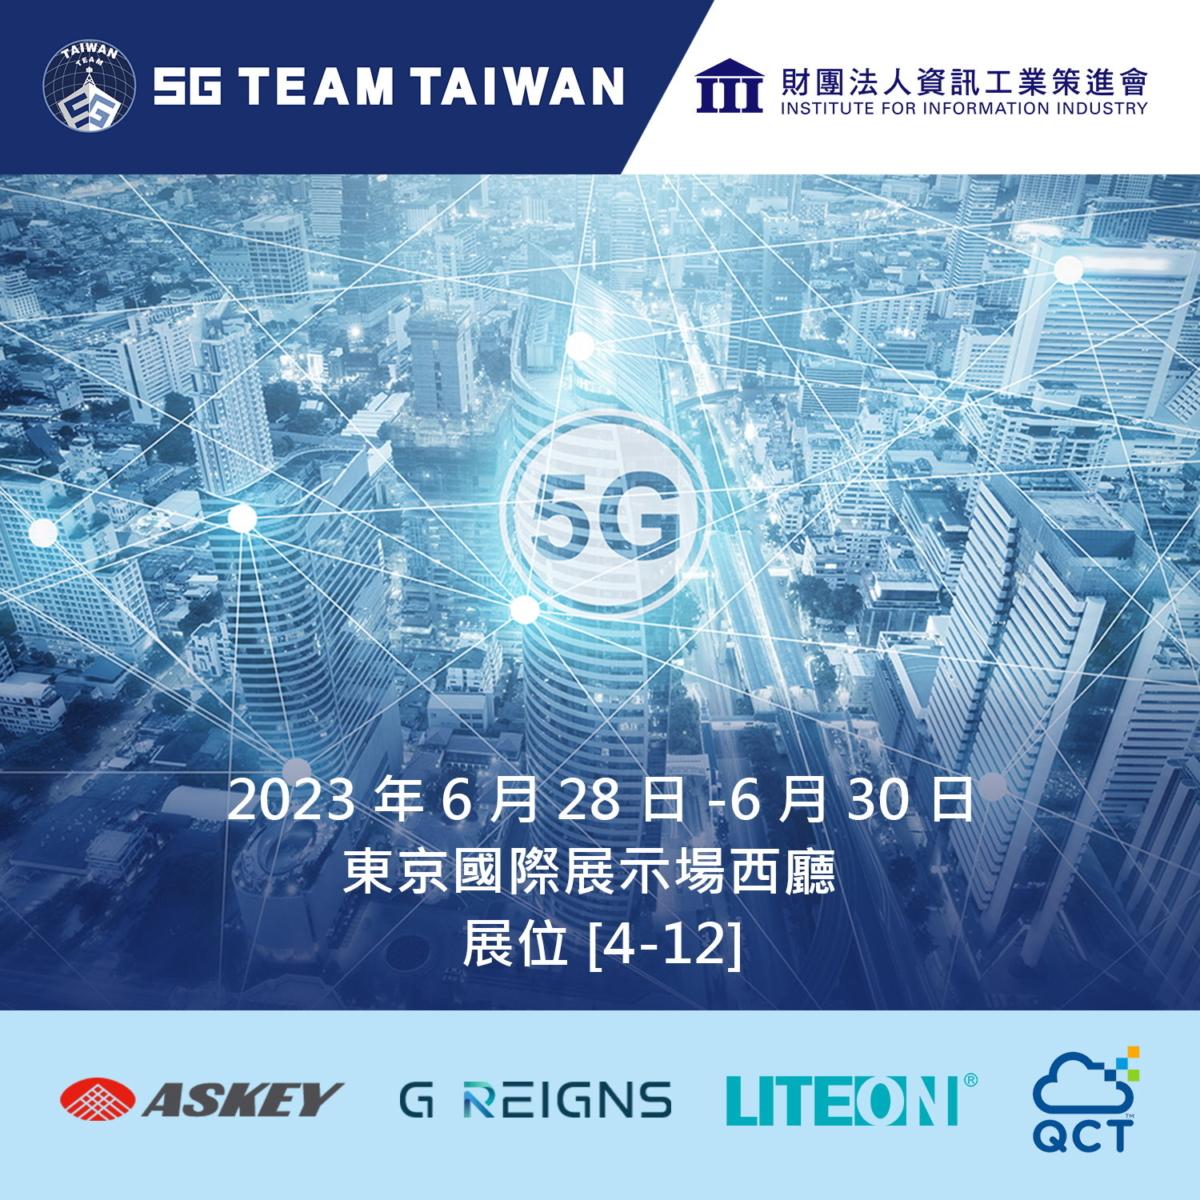 III_COMNEXT_2023_5G_Team_Taiwan_CH-2